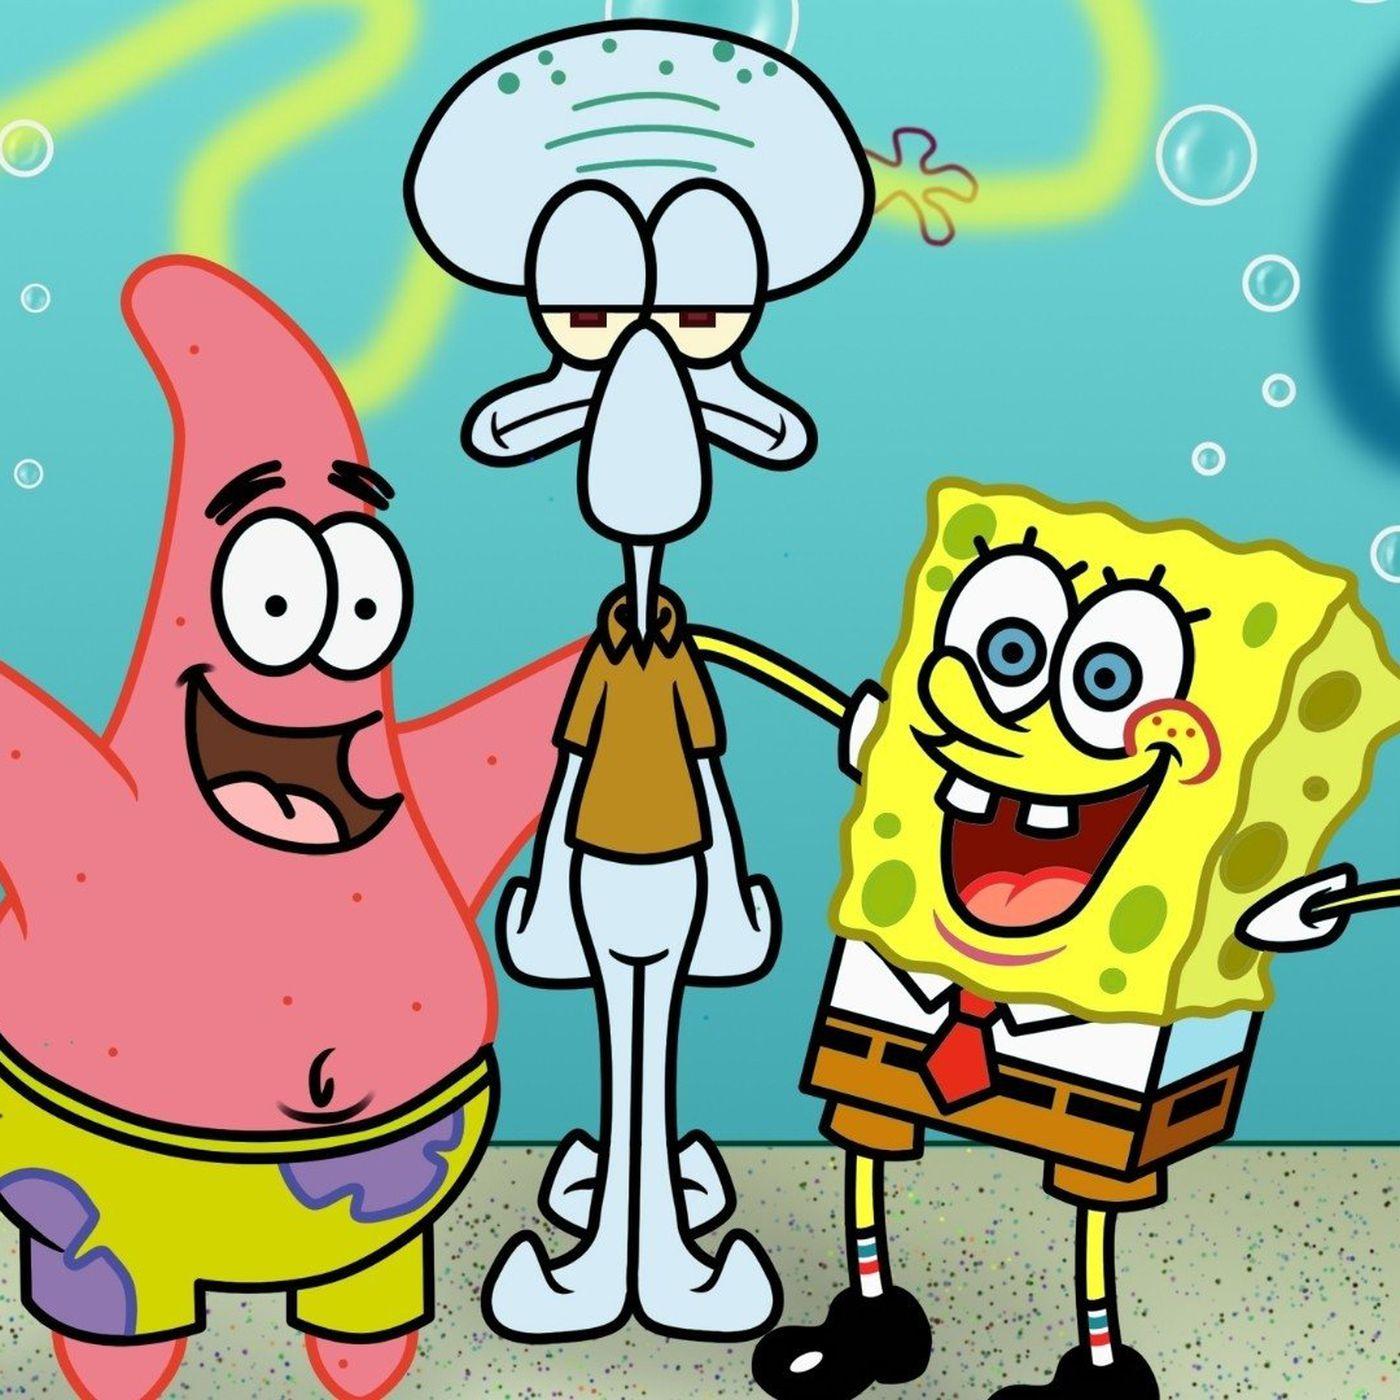 Spongebob memes: Mocking Spongebob, Caveman Spongebob, and more